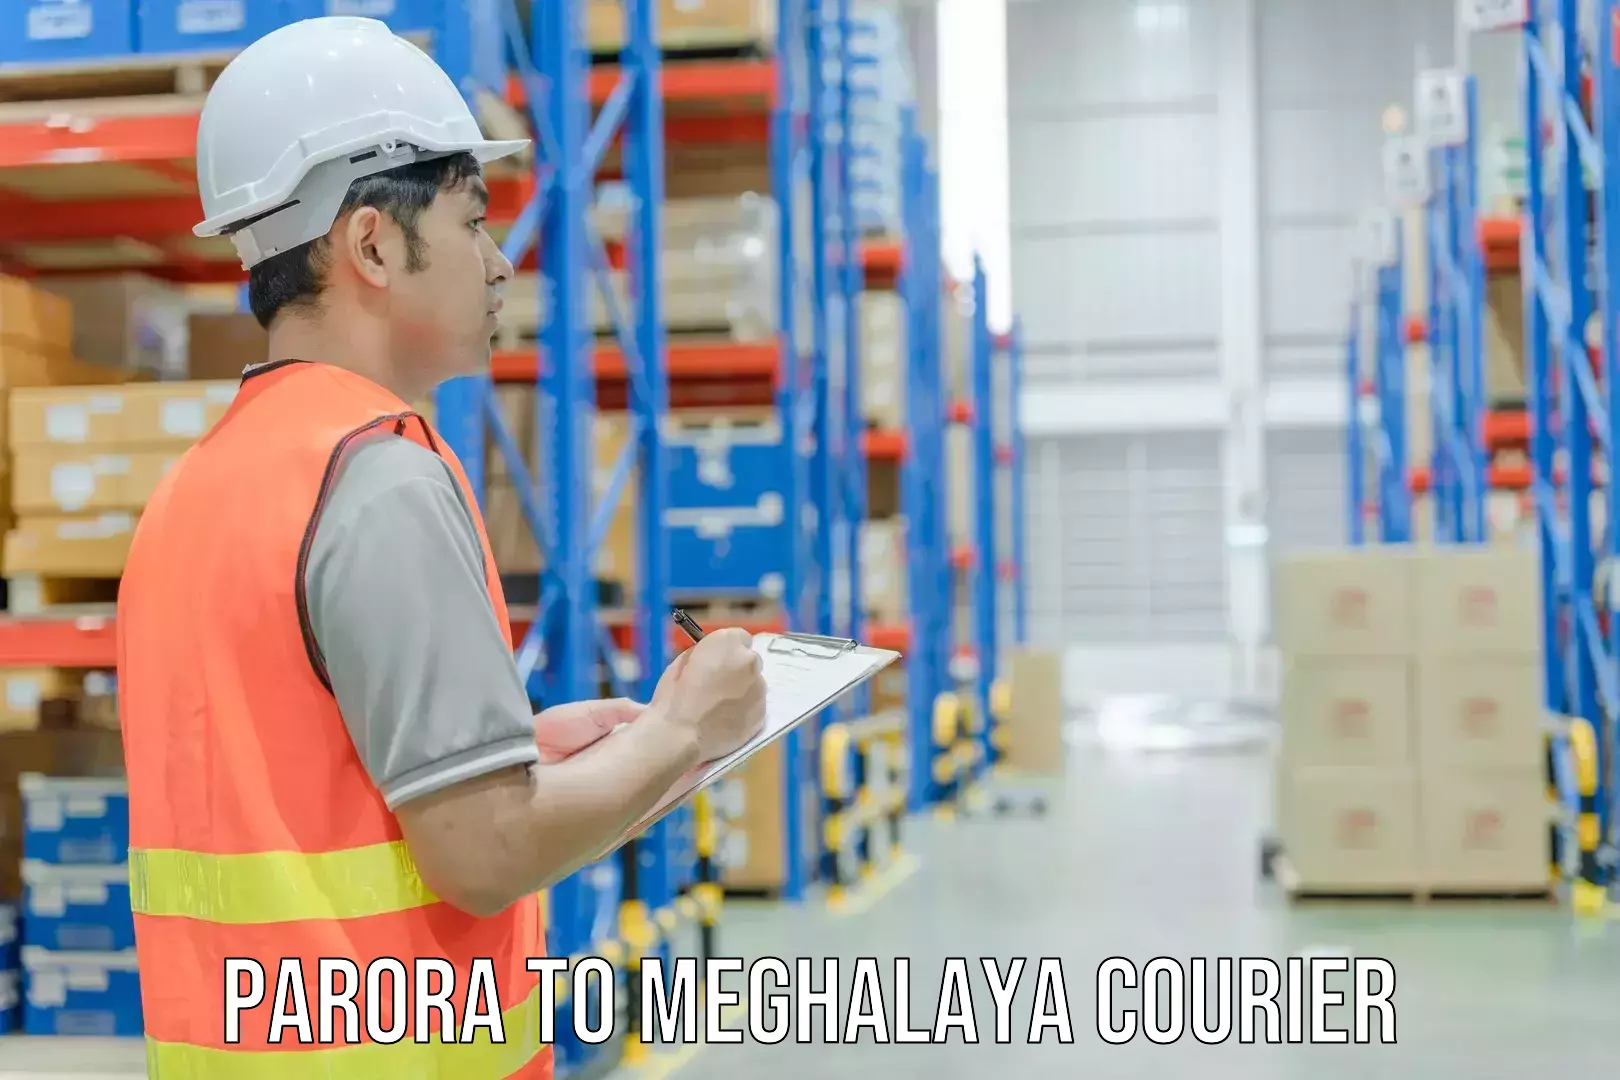 Courier service innovation Parora to Meghalaya